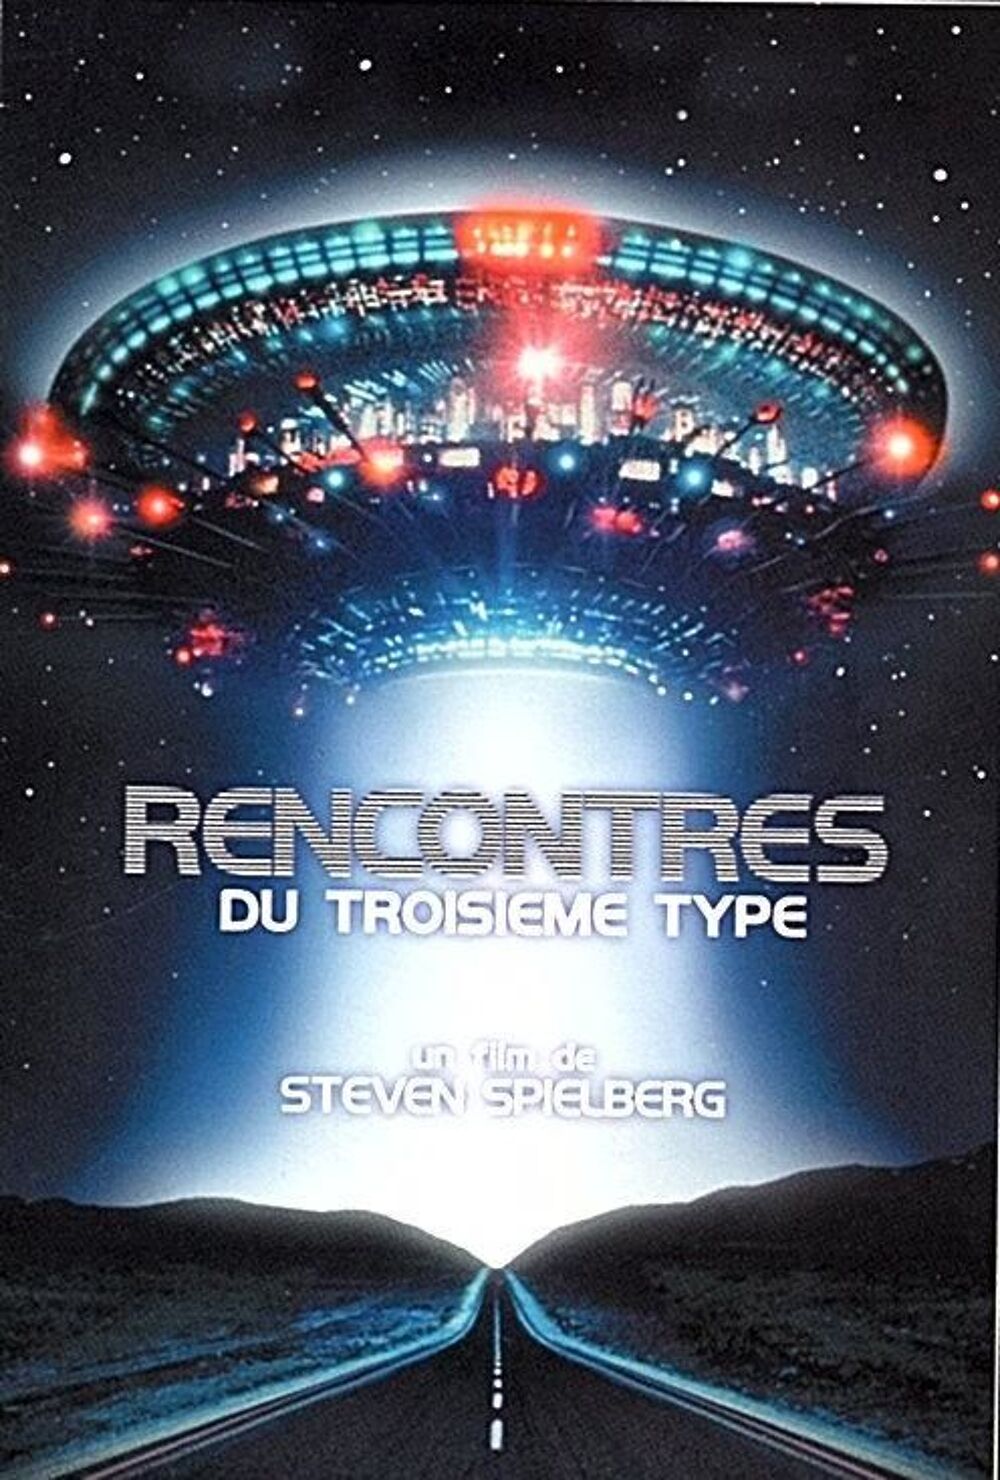 RENCONTRES DU TROISI&Egrave;ME TYPE (sci-fi) Format : DVD Le syno DVD et blu-ray